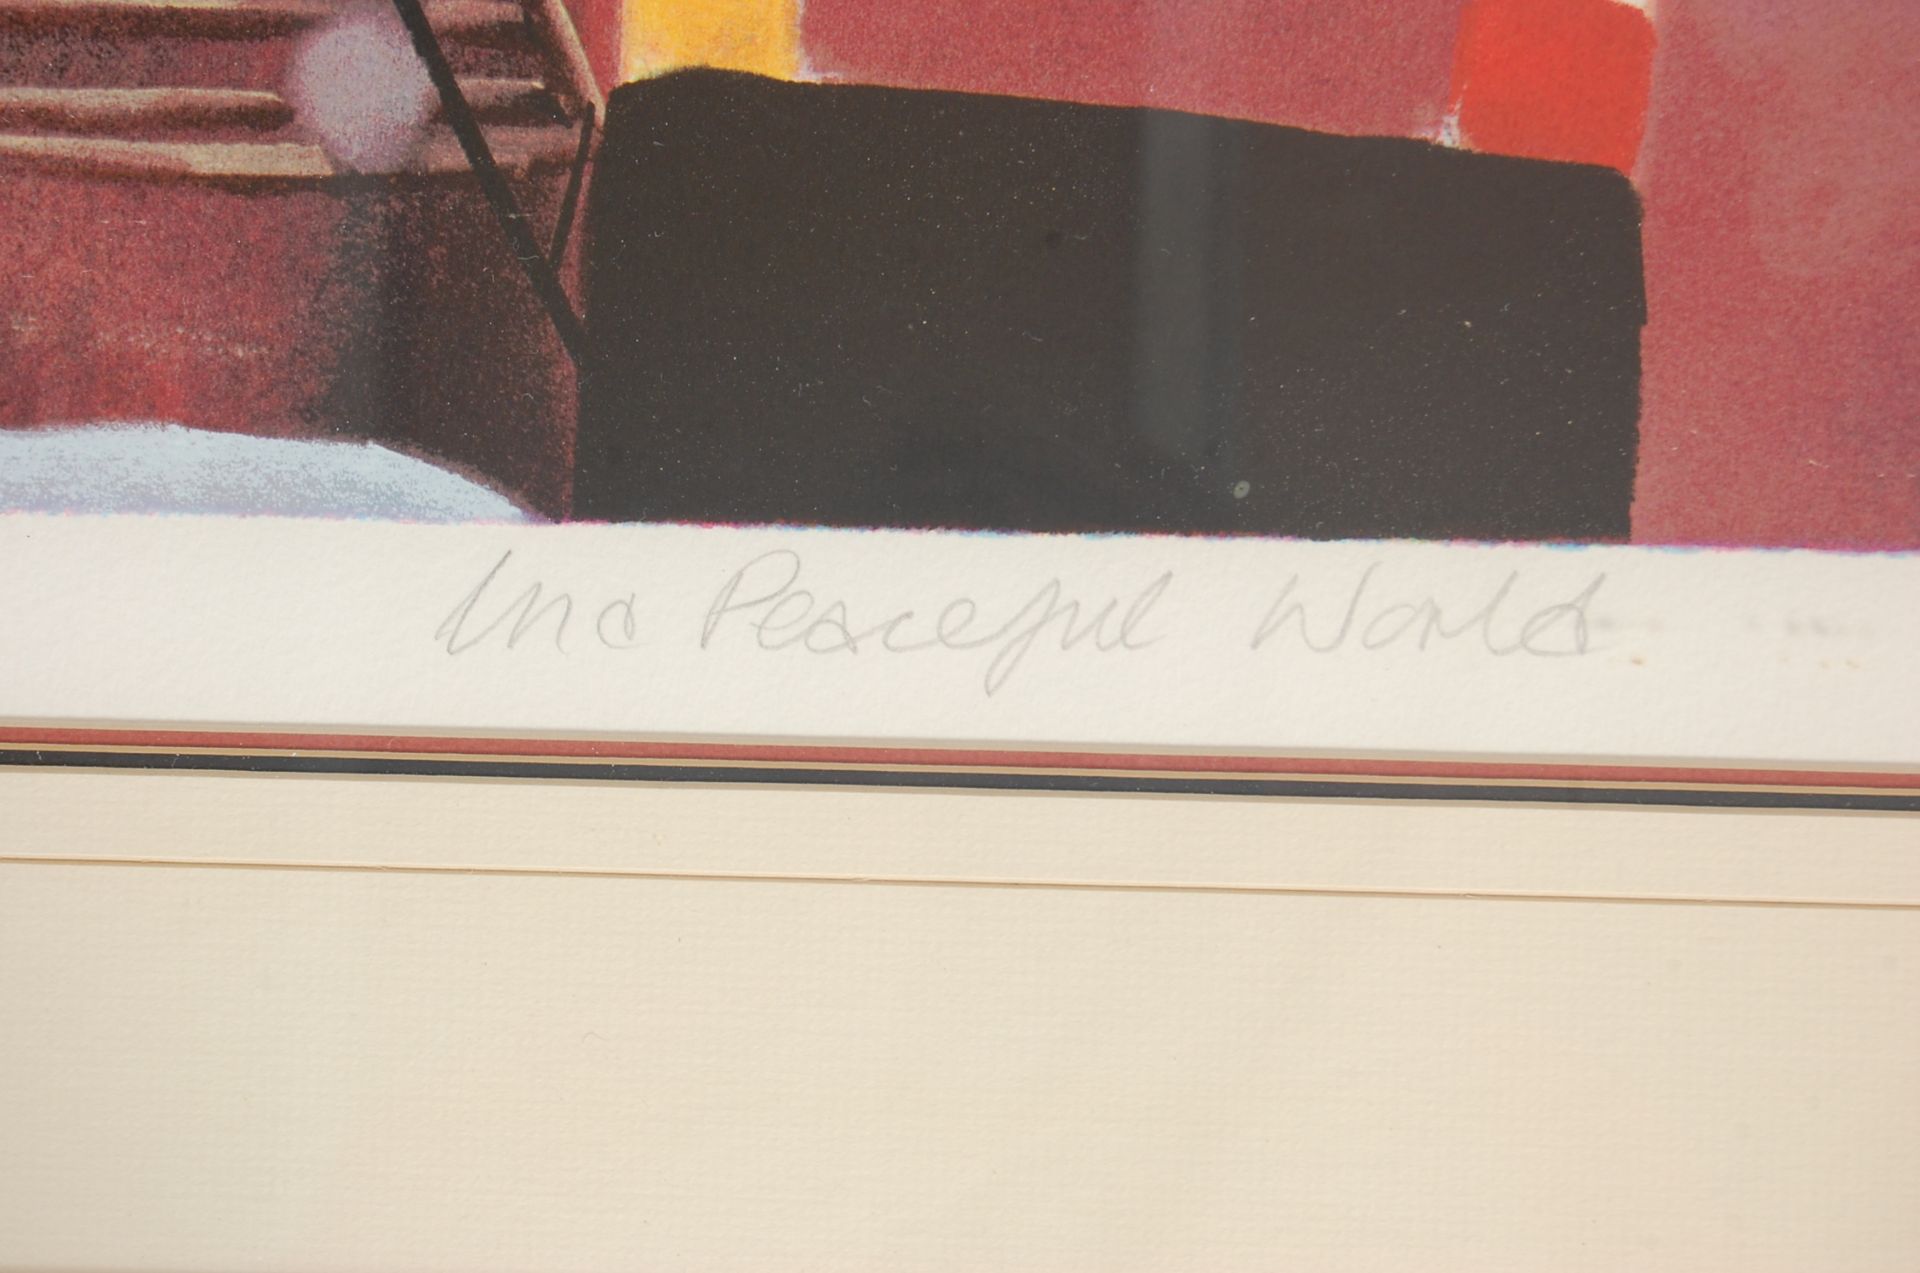 Mackenzie Thorpe (1956-) A signed limited edition print " In a Peaceful World " by Mackenzie Thorpe. - Bild 3 aus 5